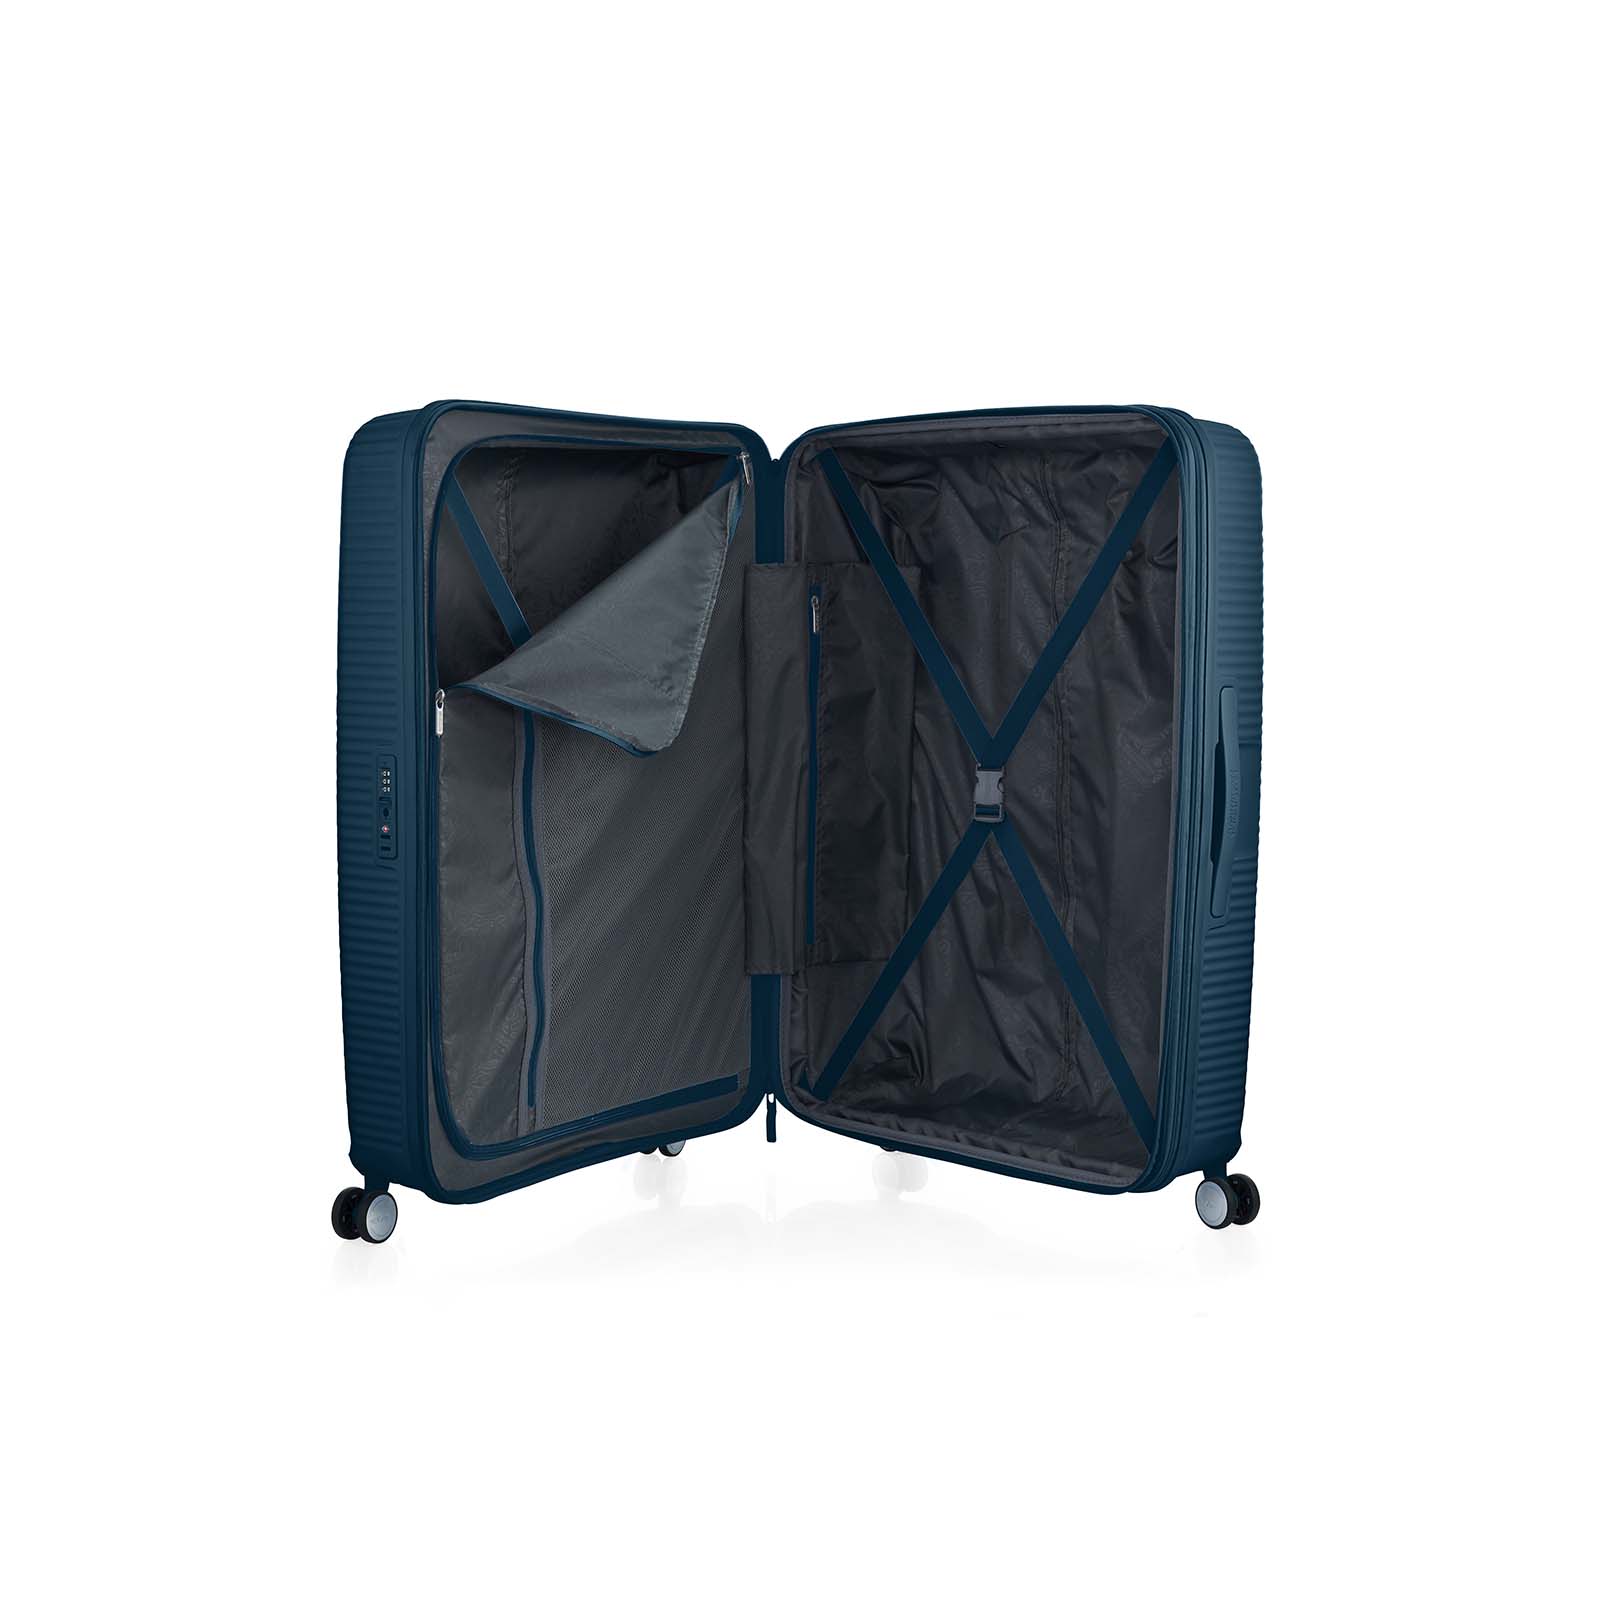 American-Tourister-Curio-2-80cm-Suitcase-Varisty-Green-Open